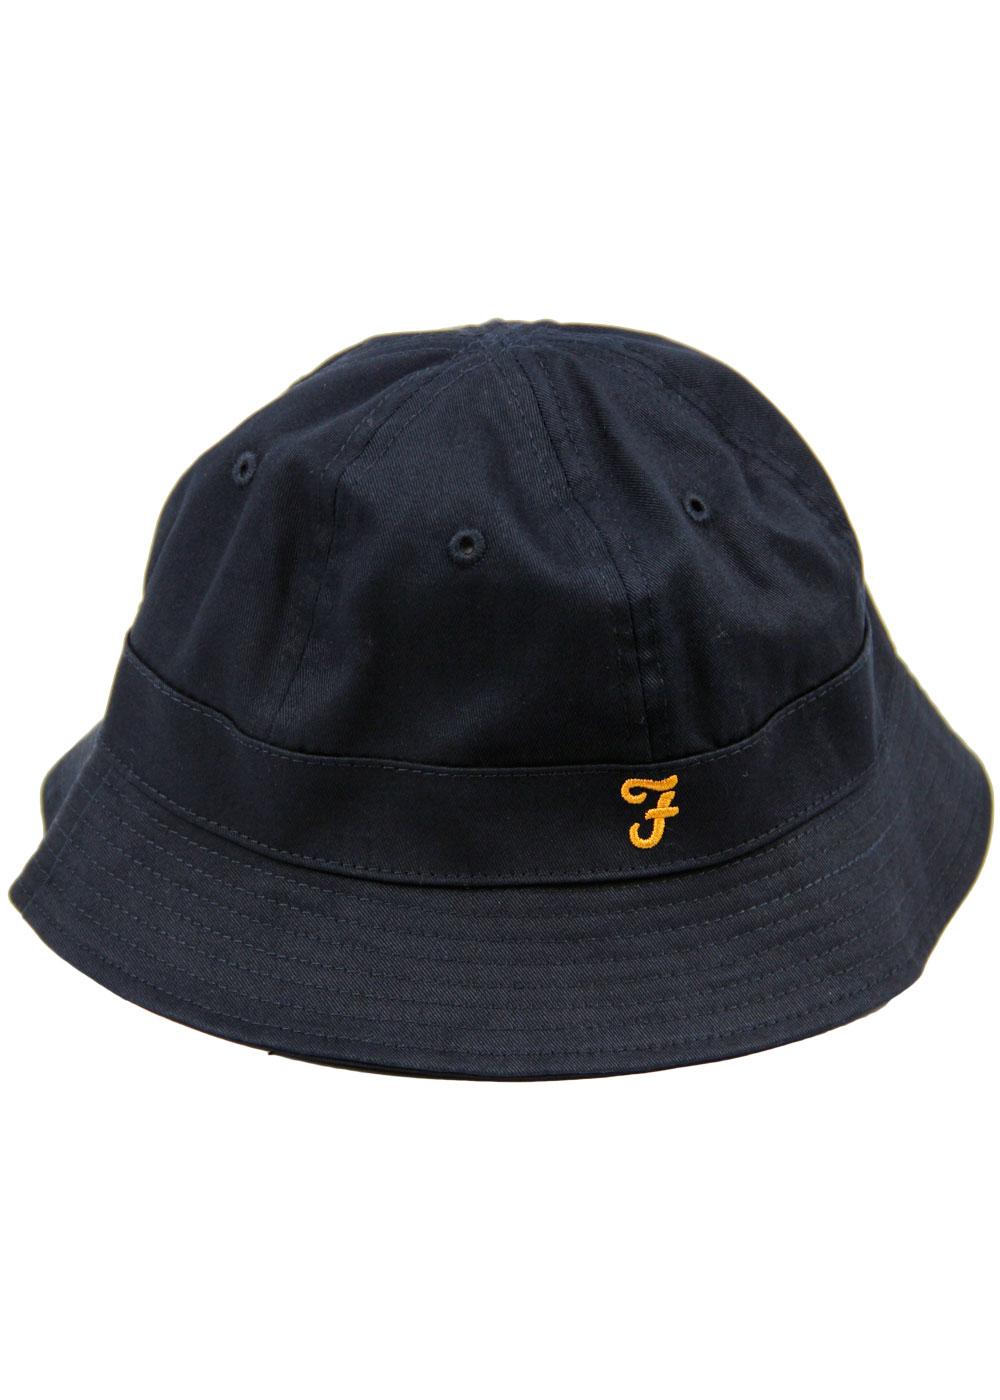 FARAH Charter Retro Indie 1990s Cotton Bucket Hat in Navy